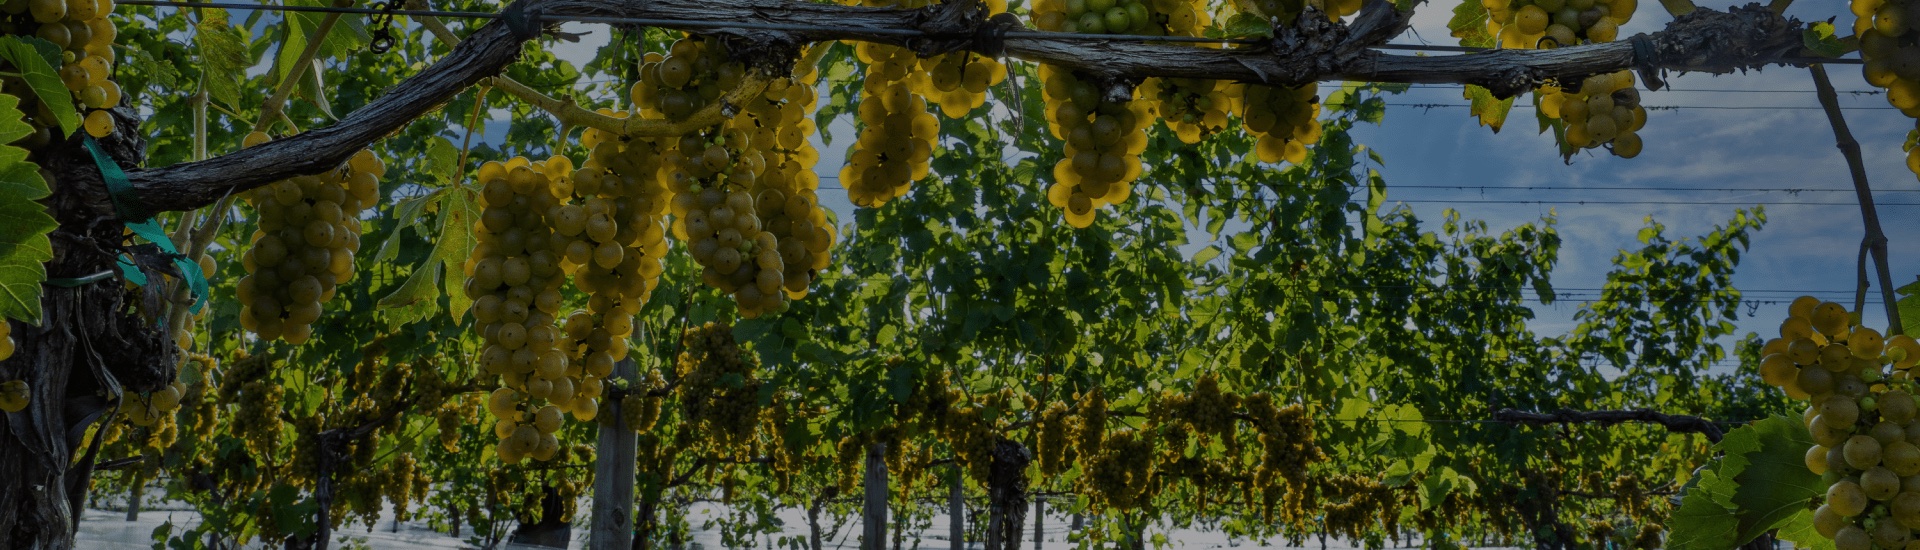 Barrel Oak Winery - Ripe White Grapes